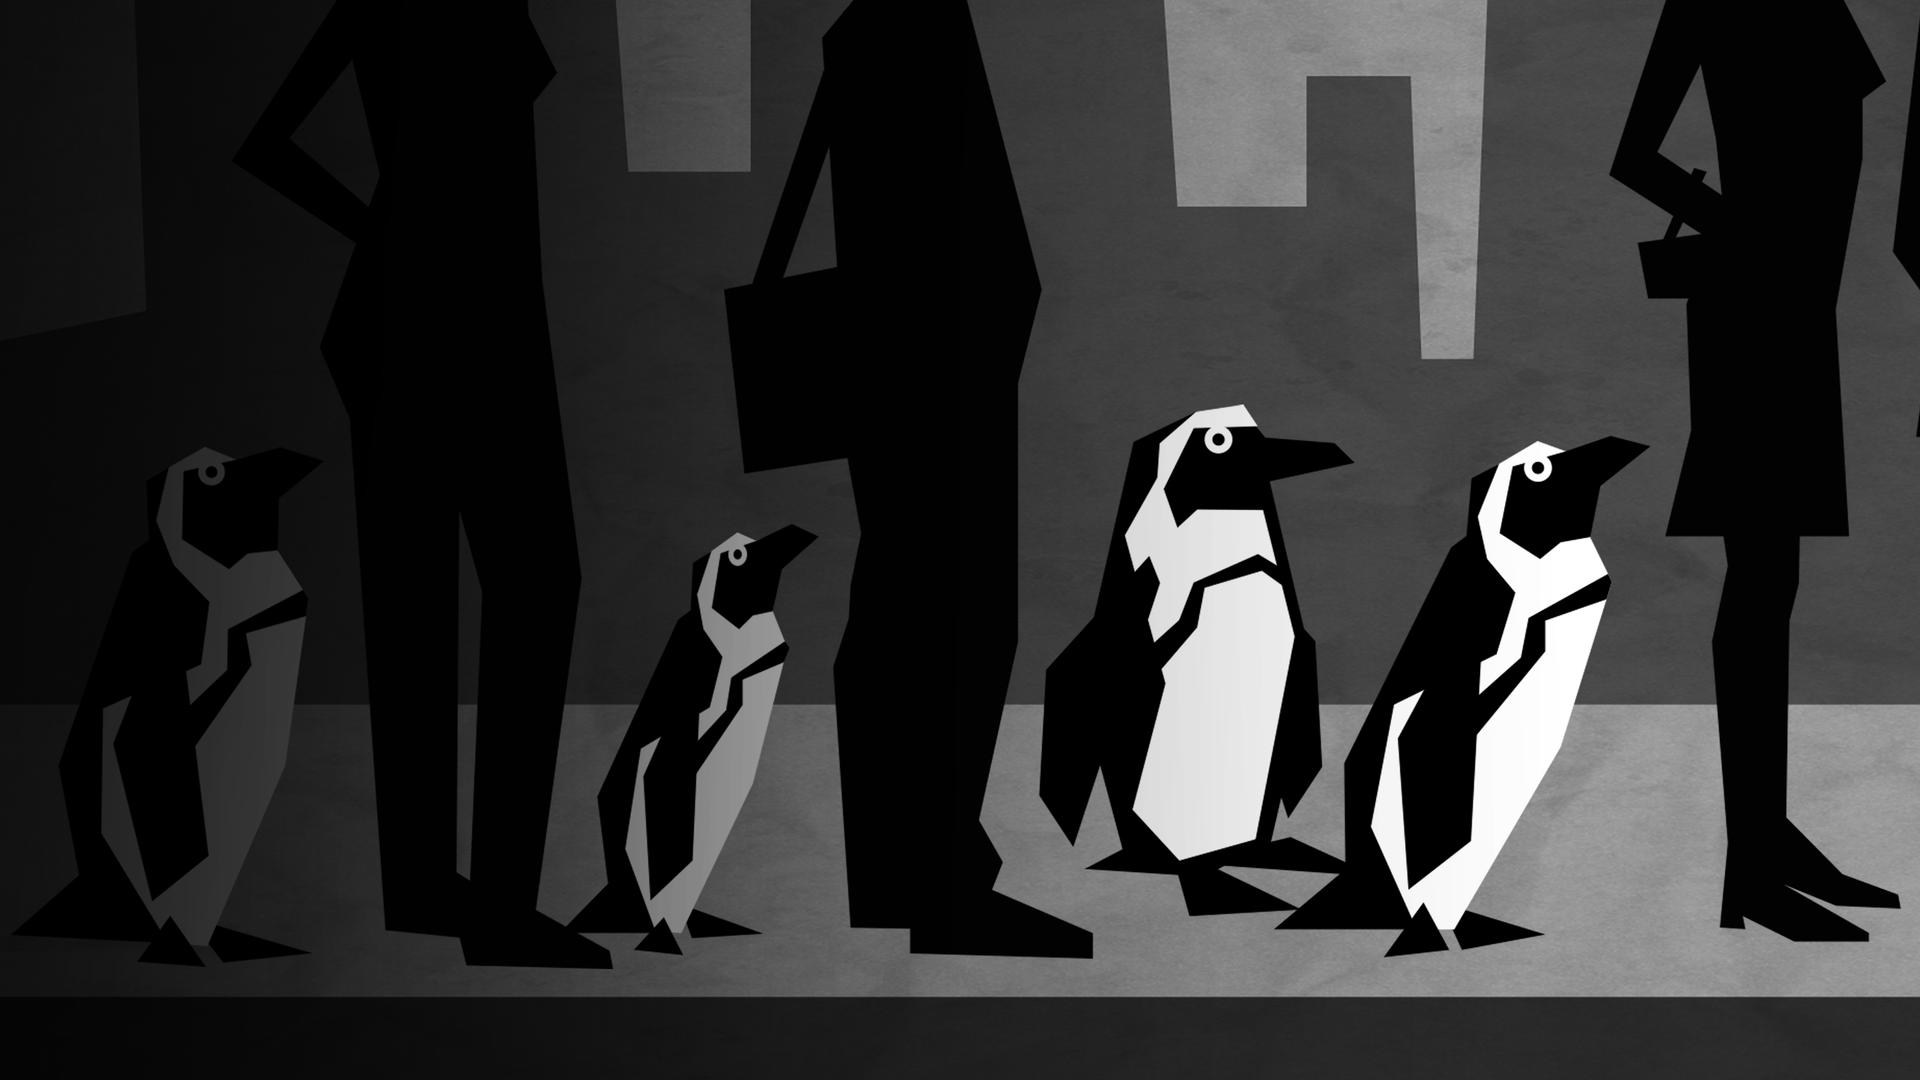 City Slickers: Penguin Invasion